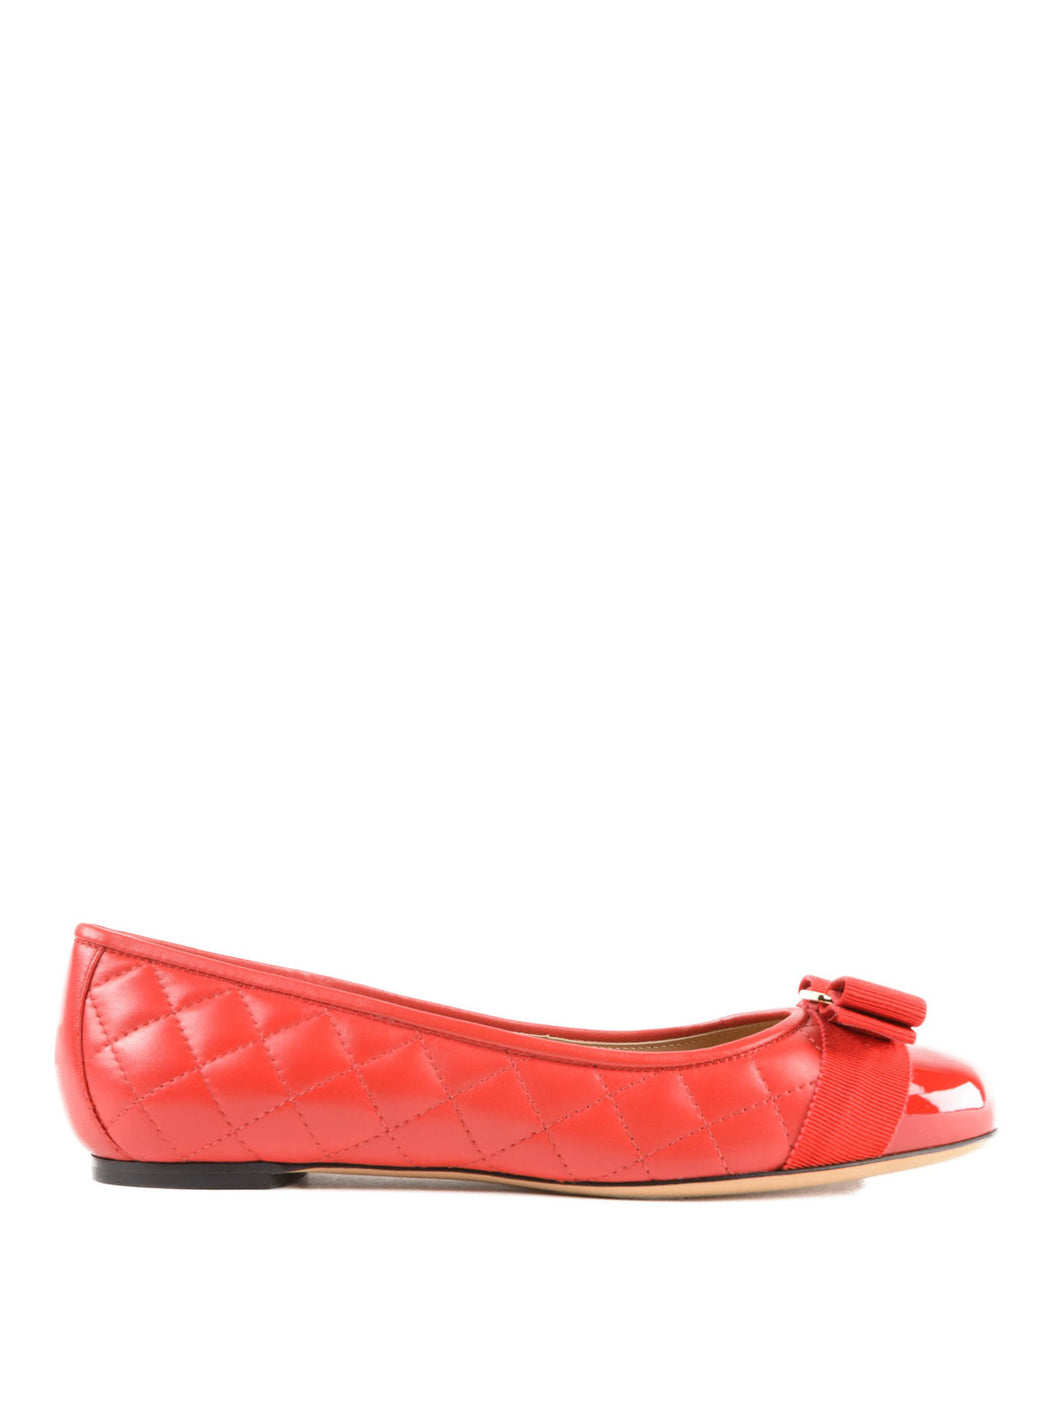 NEW SALVATORE FERRAGAMO Varina Quilted Women's 672104 Red Flat Size 6.5 C MSRP $675